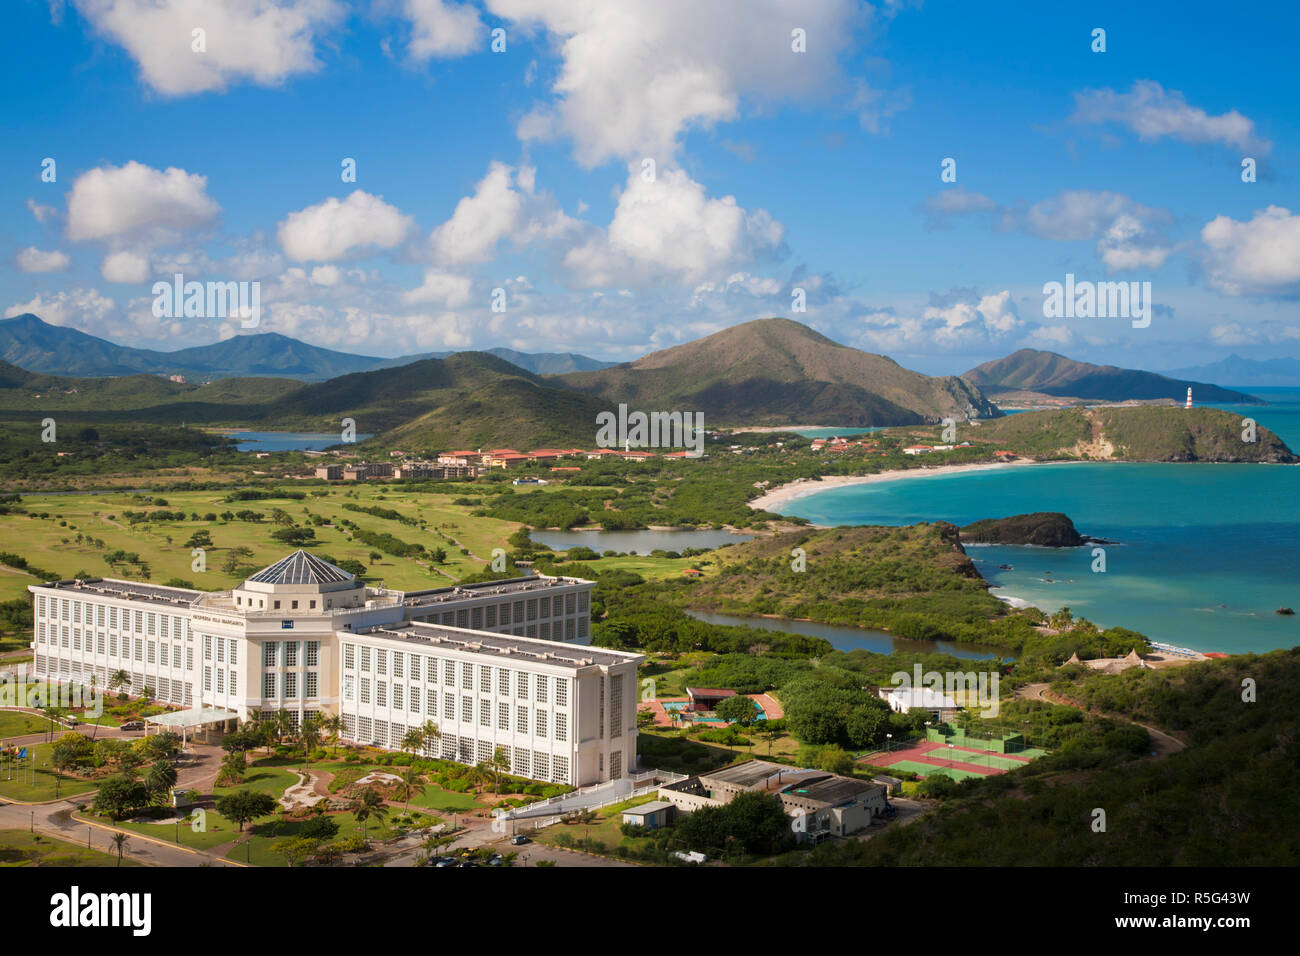 Venezuela, Nueva Esparta, Isla De Margarita - Margarita Island, Hesperia Isla Margarita hotel, a luxury hotel with its own golf course Stock Photo